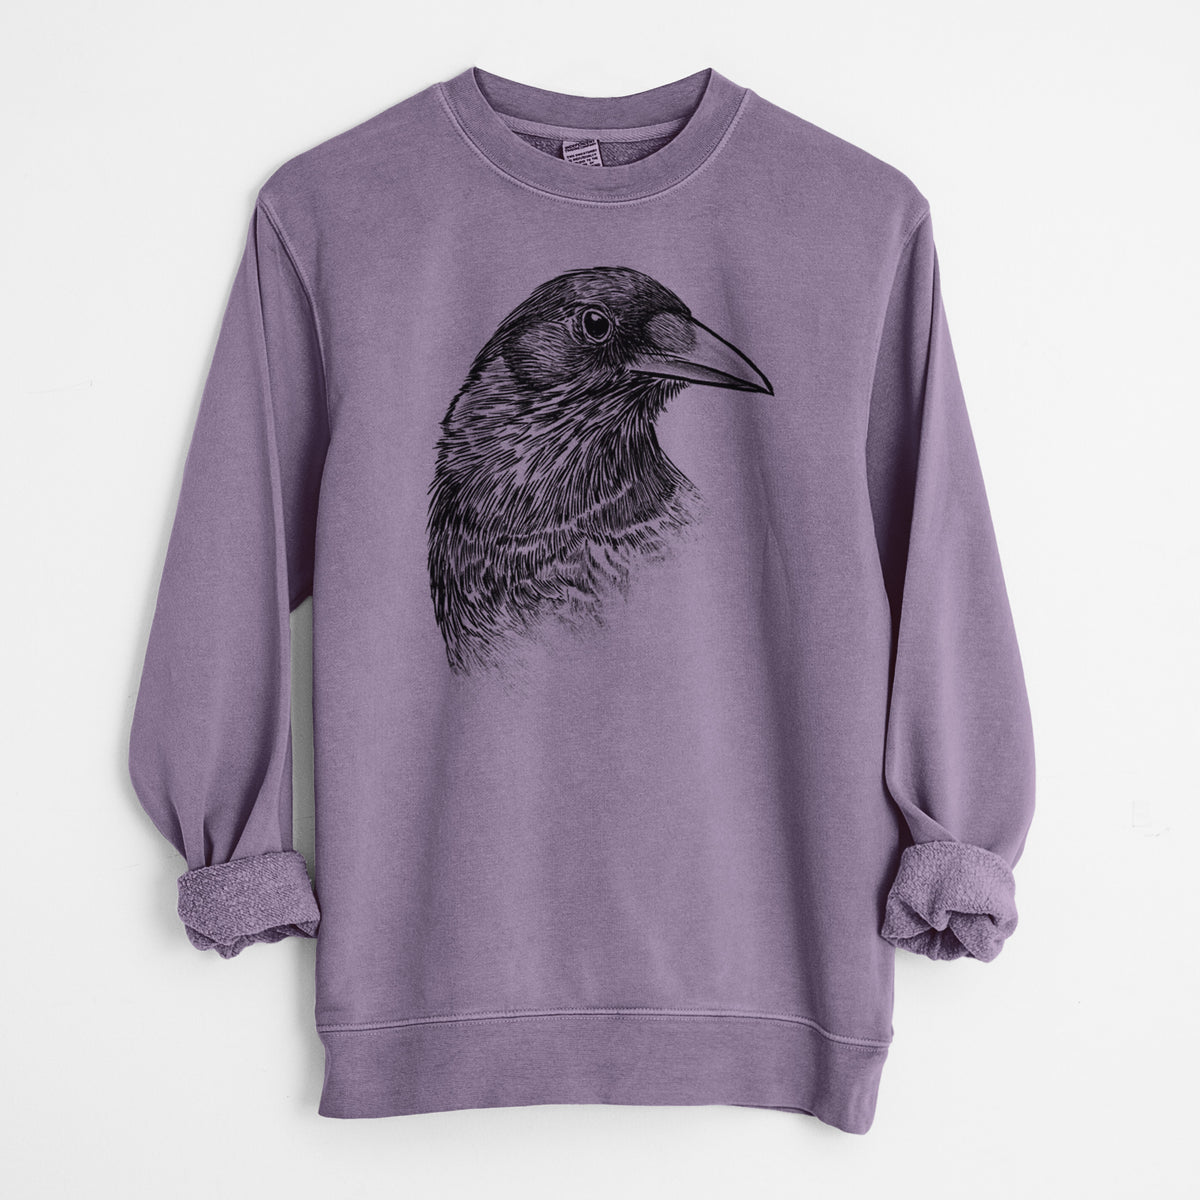 American Crow Bust - Corvus brachyrhynchos - Unisex Pigment Dyed Crew Sweatshirt